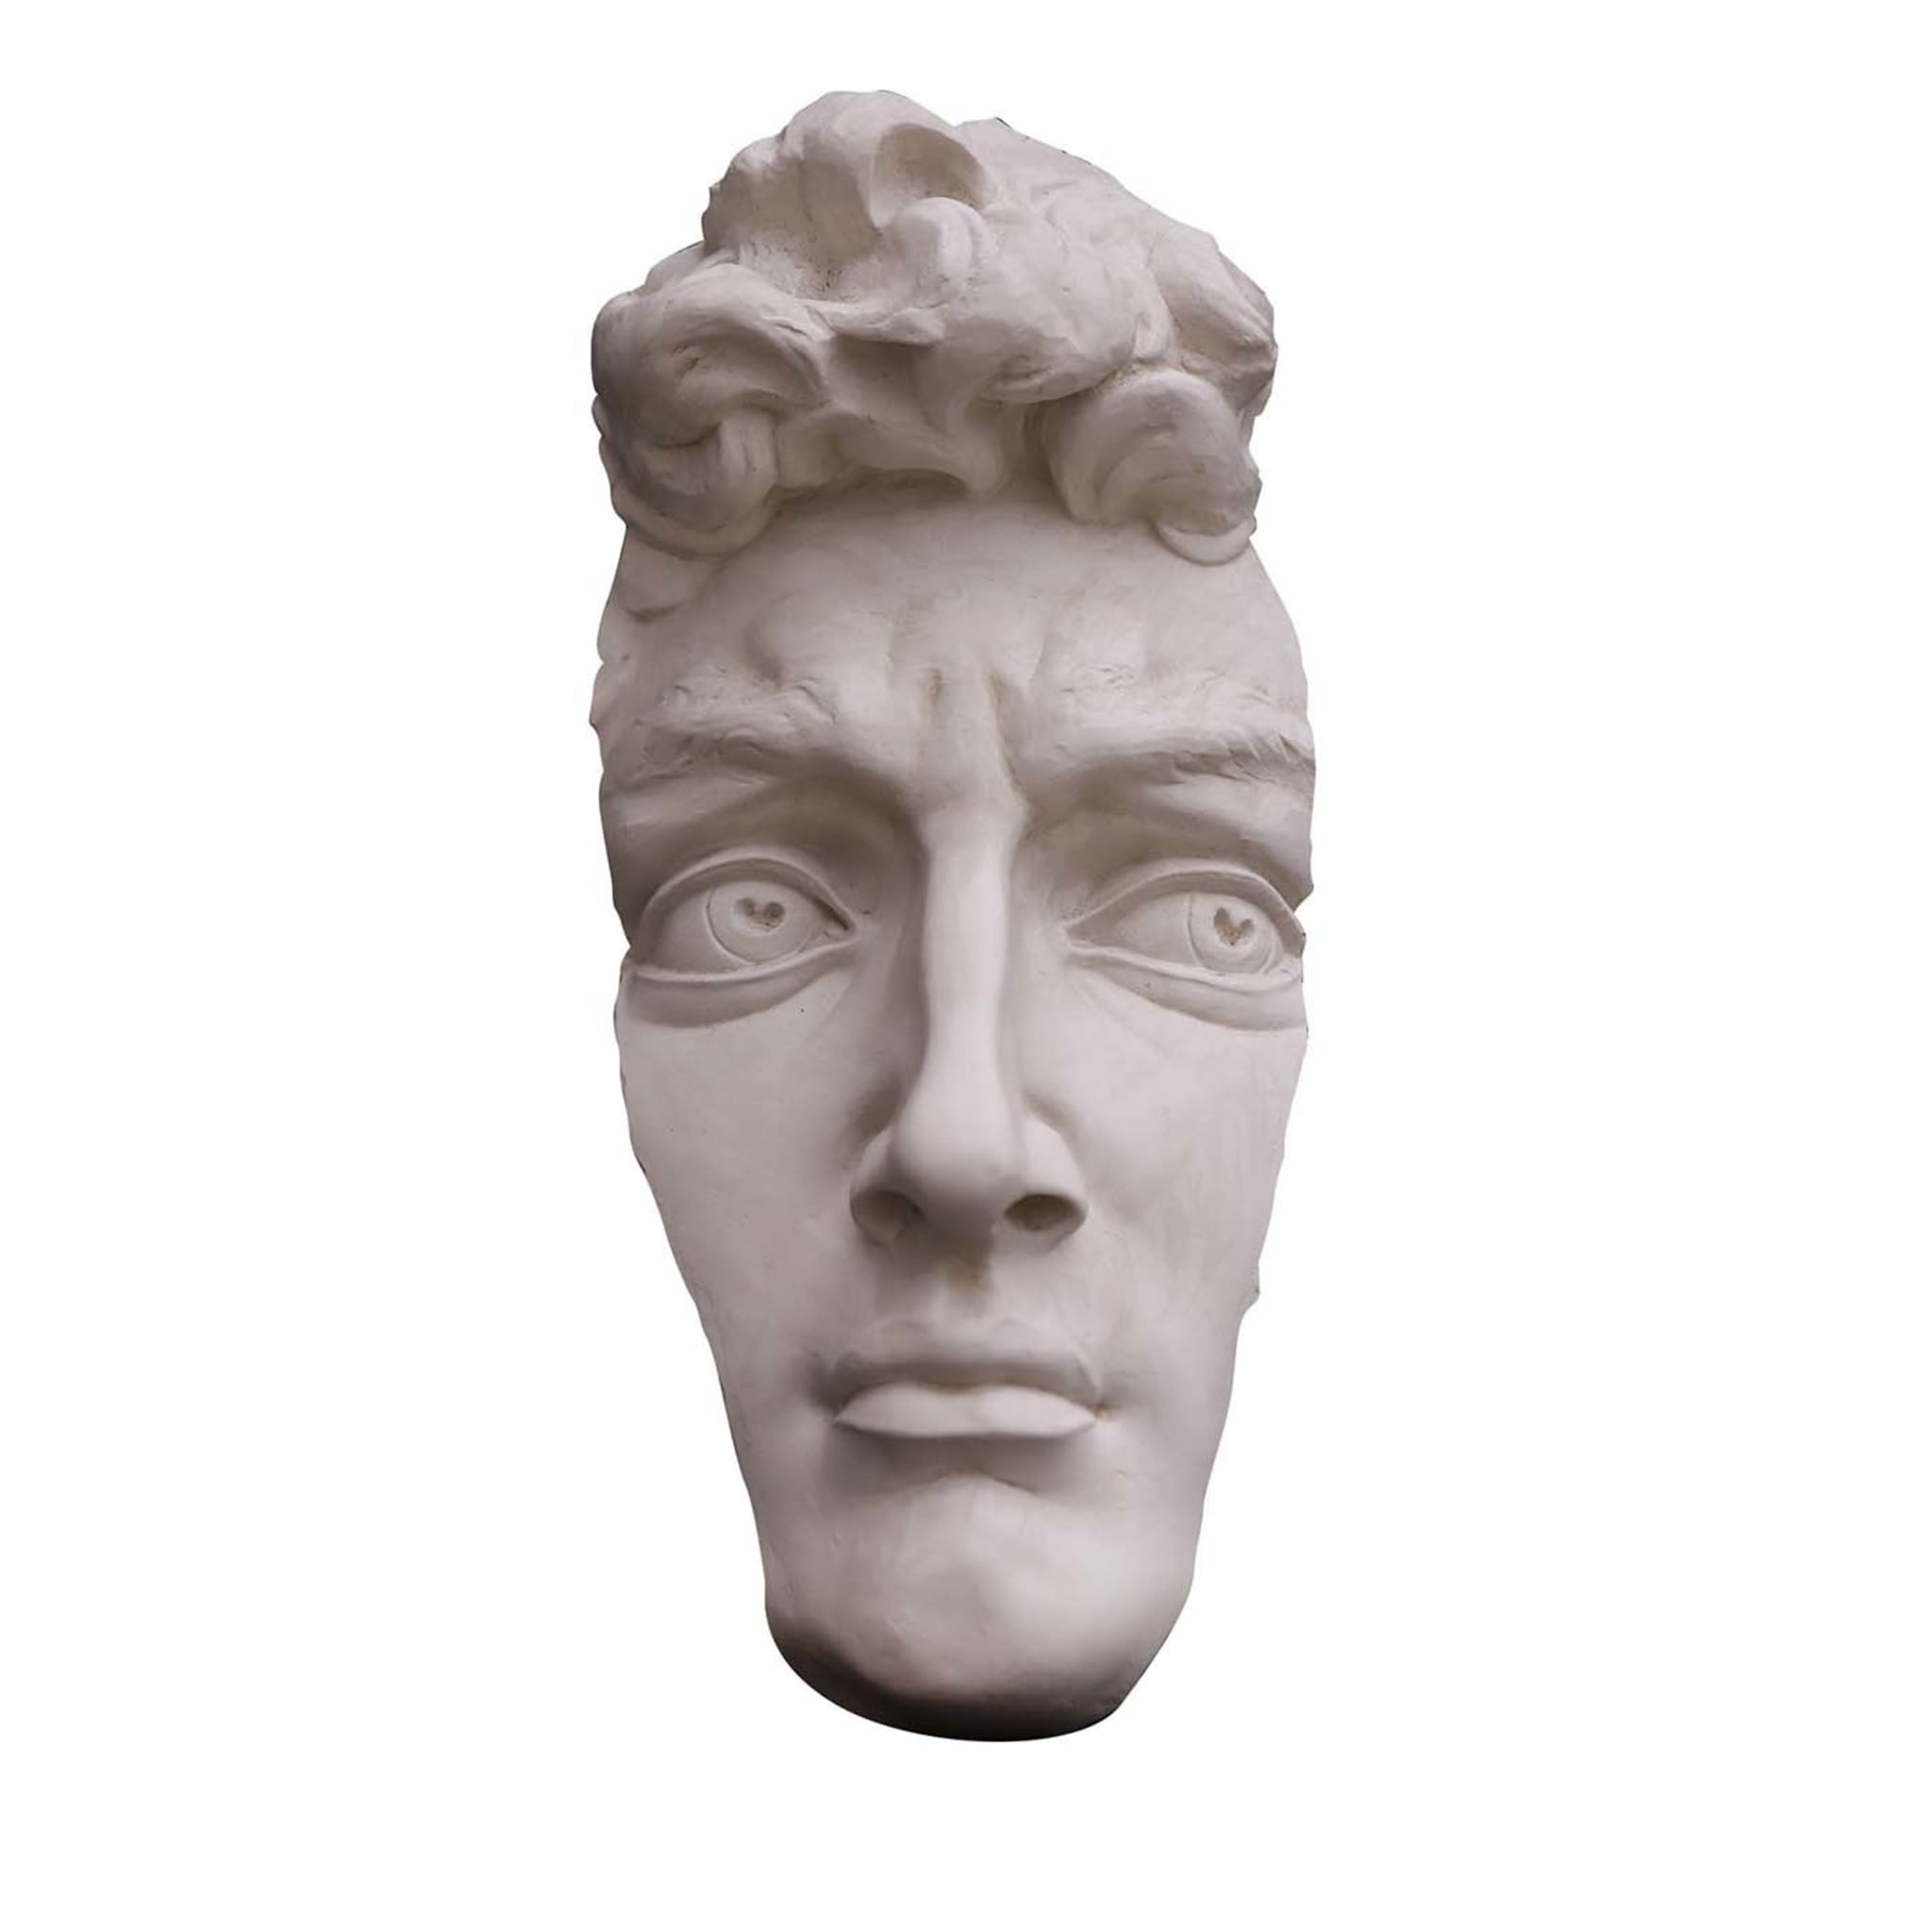 Le profil de la sculpture de David - Vue principale